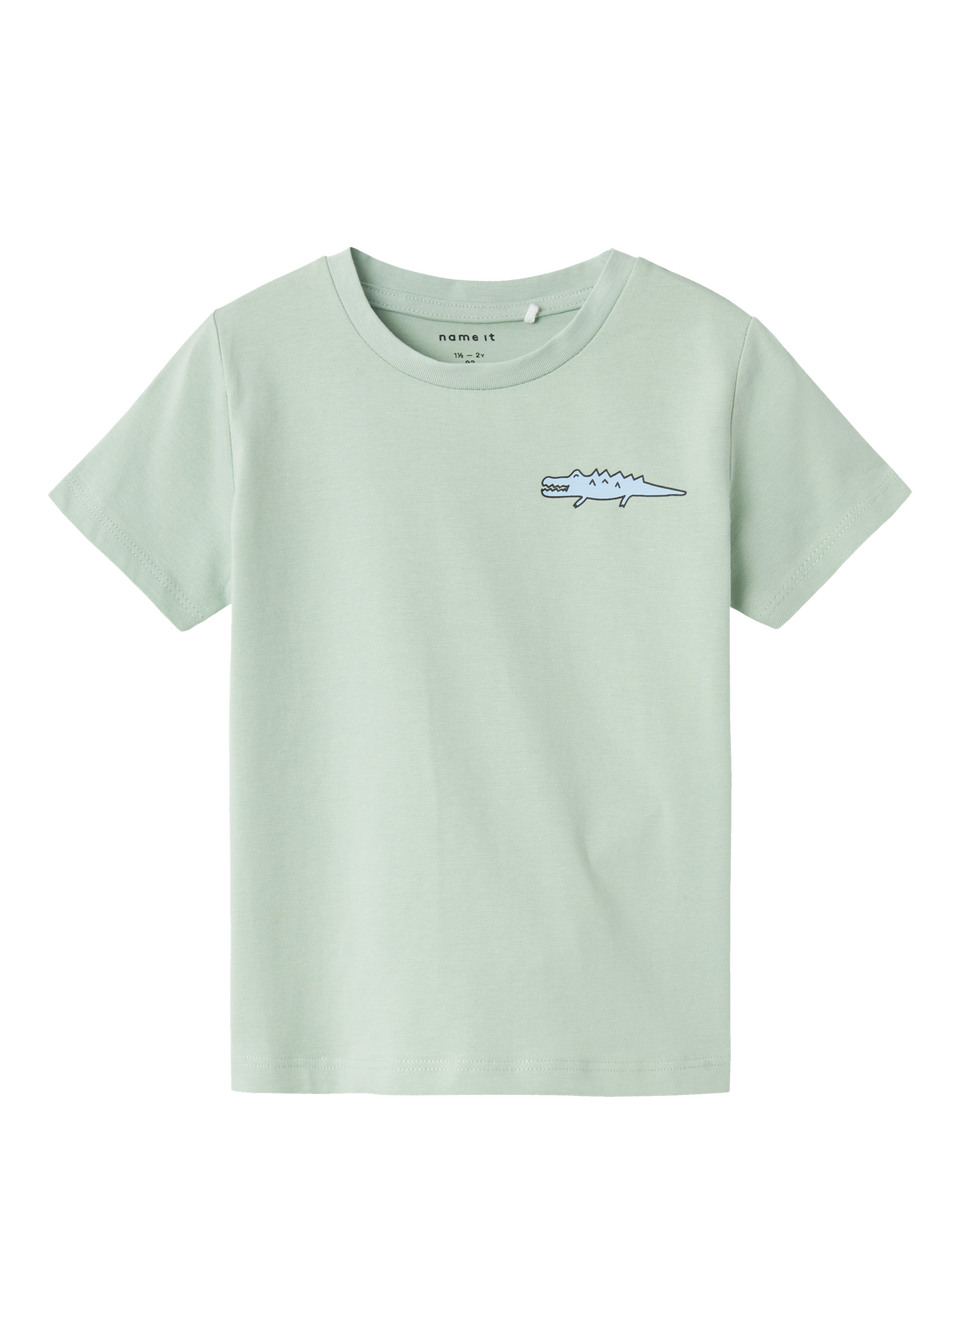 Name It Boys Green Crocodile T-Shirt (9mths-5yrs)